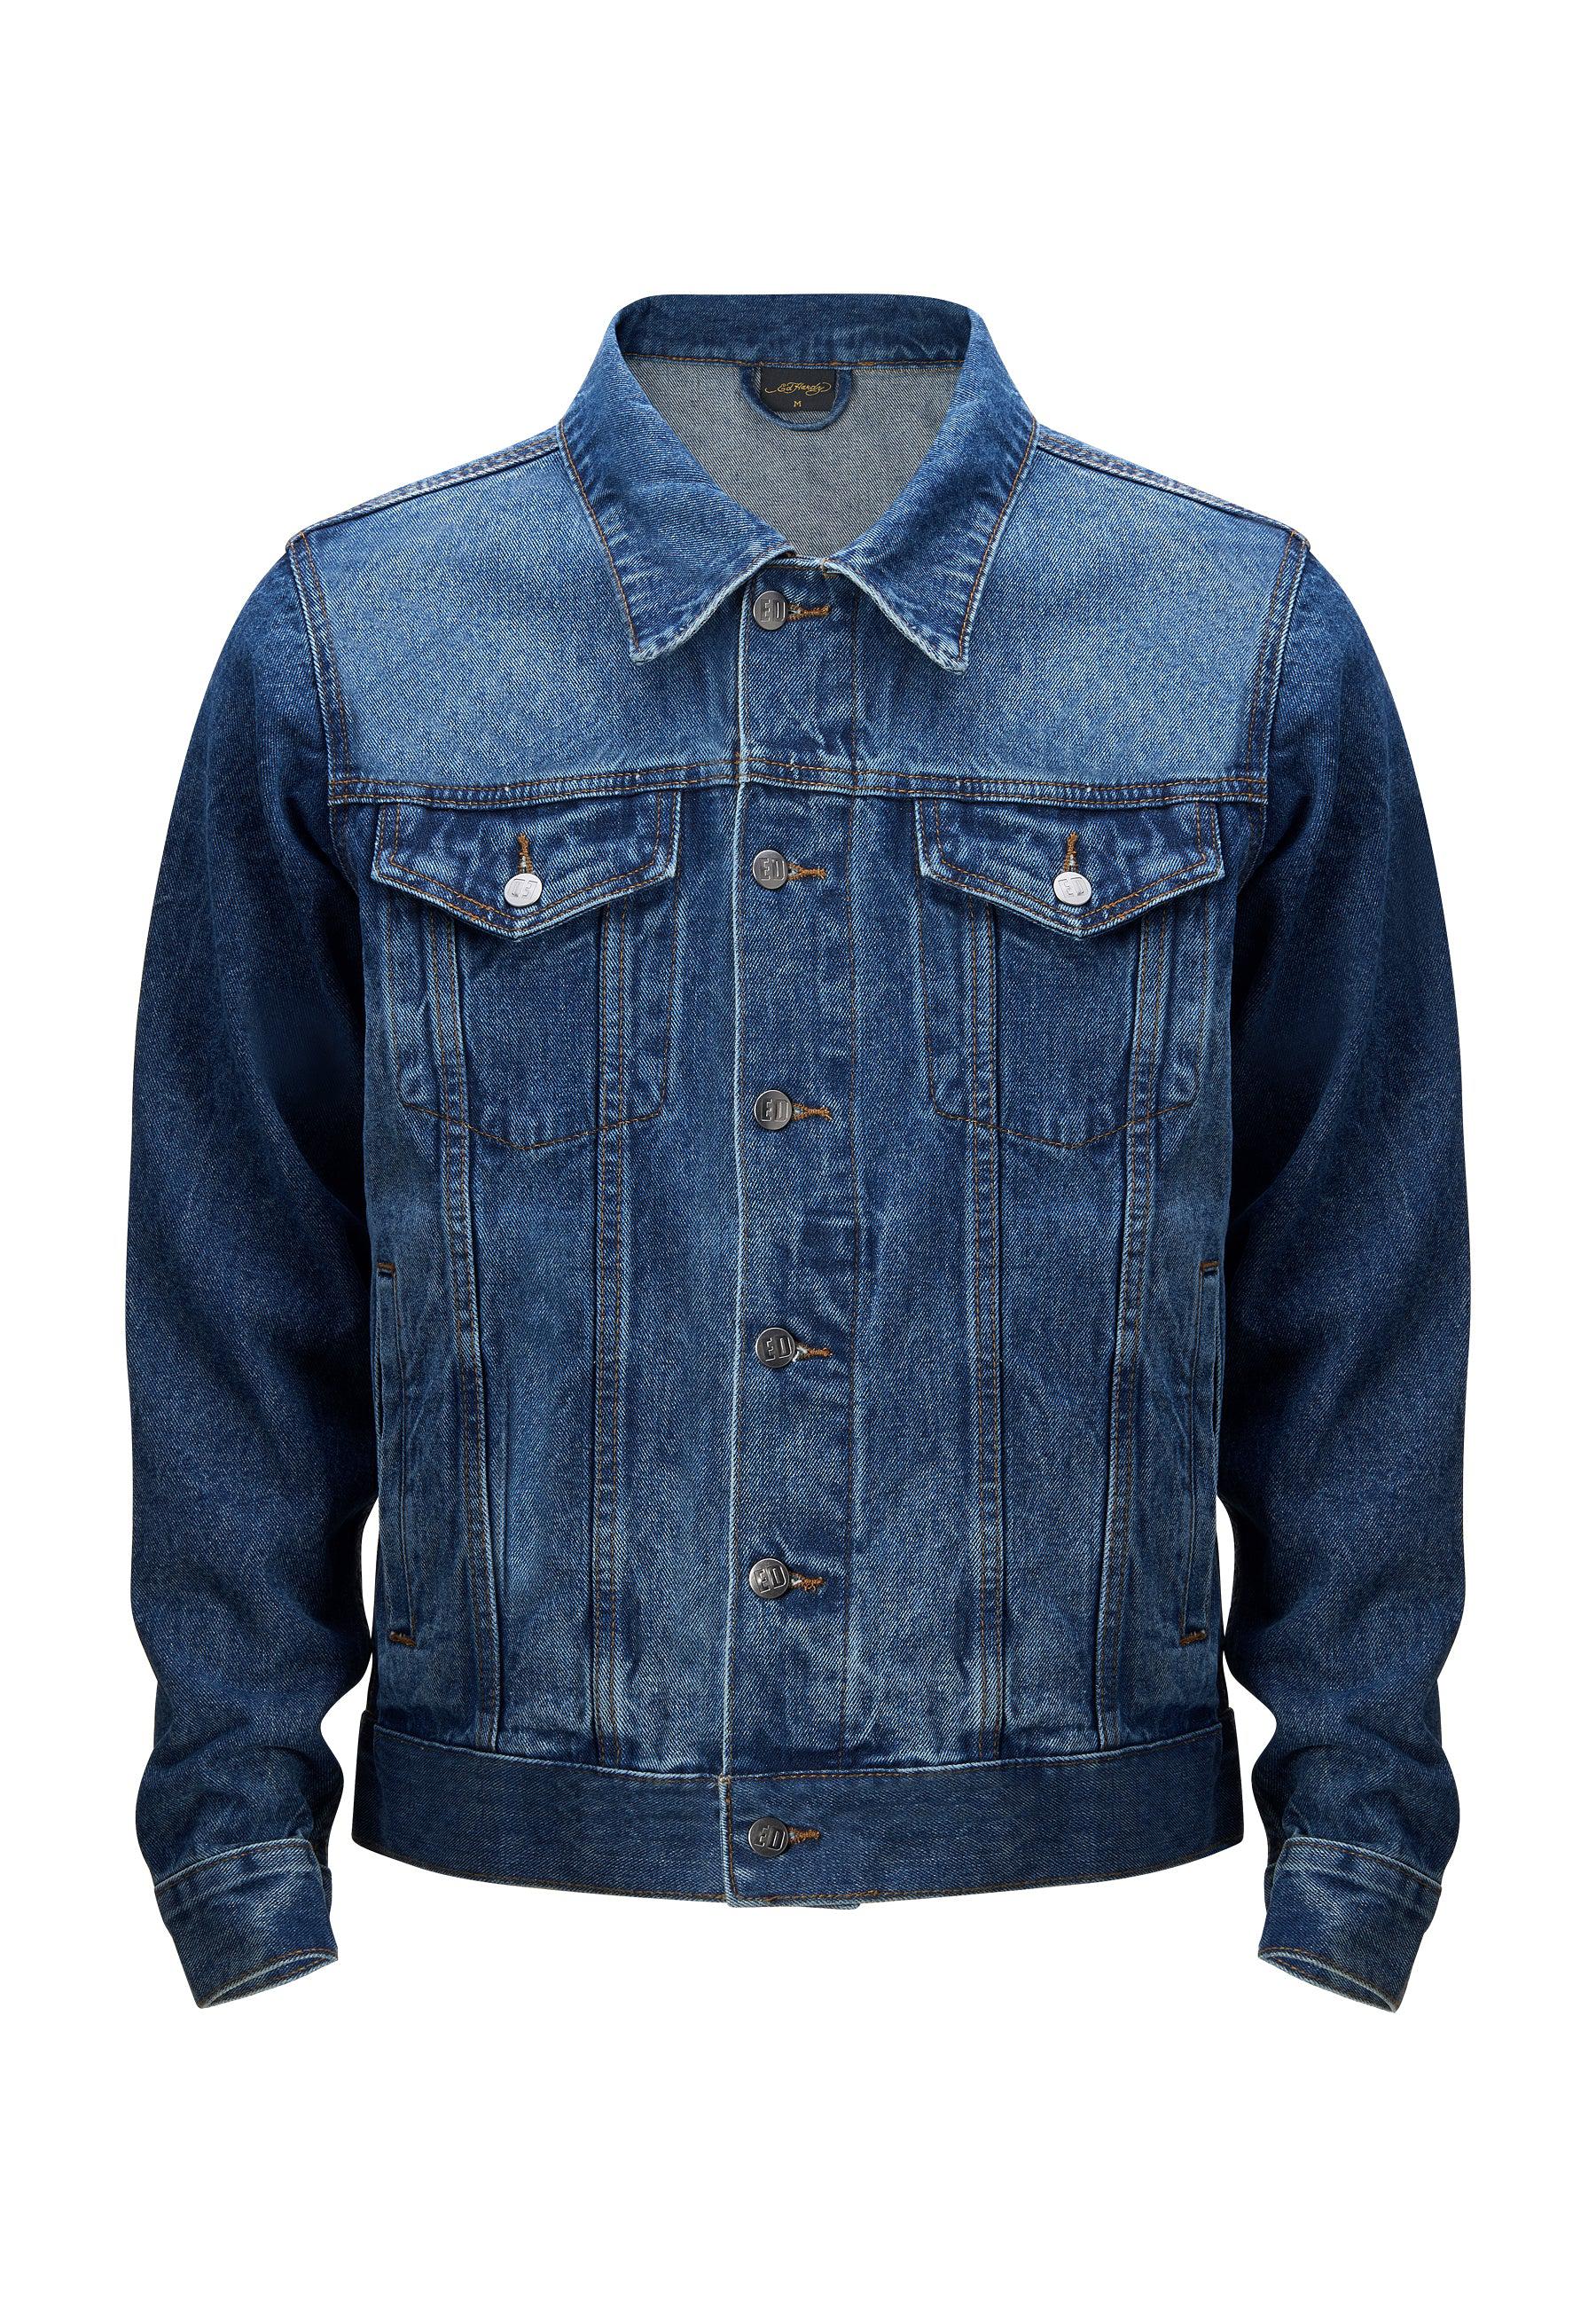 Men's Light Indigo Blazer- Indigo Jacket for Men-Light Denim Blazer